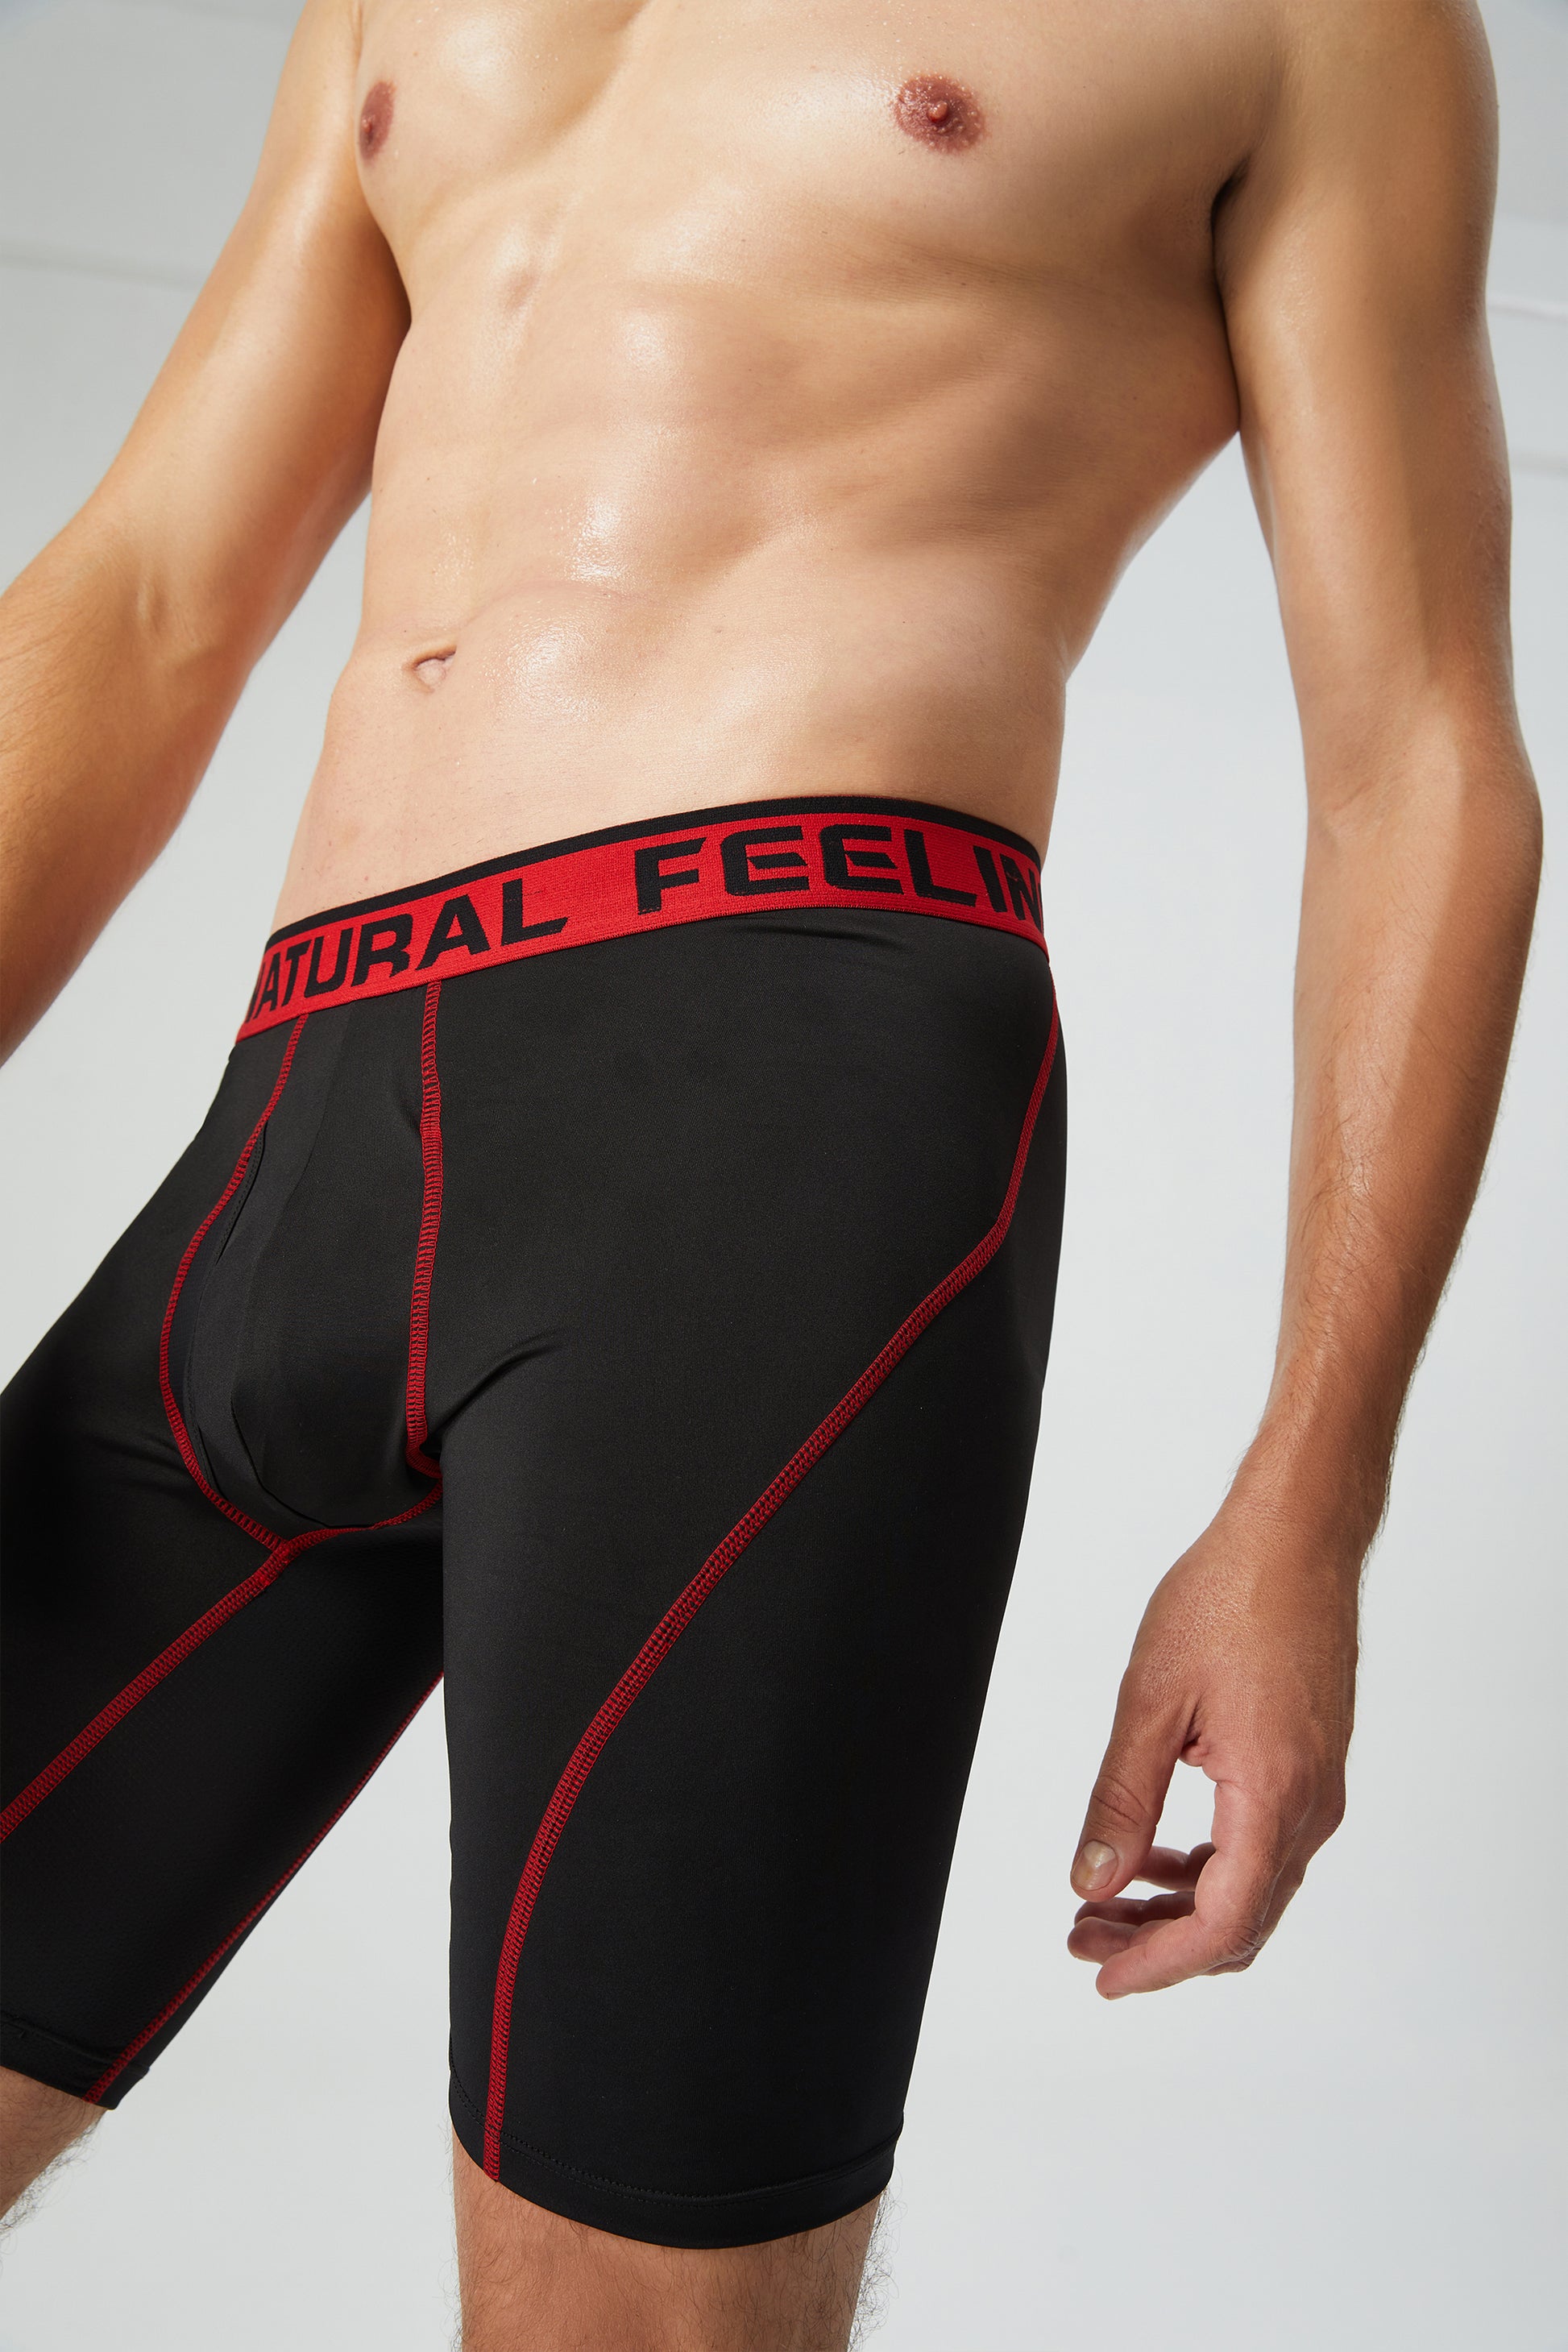 Natural Feelings Mens Underwear Boxer Briefs Long Leg 9 Inch Performan